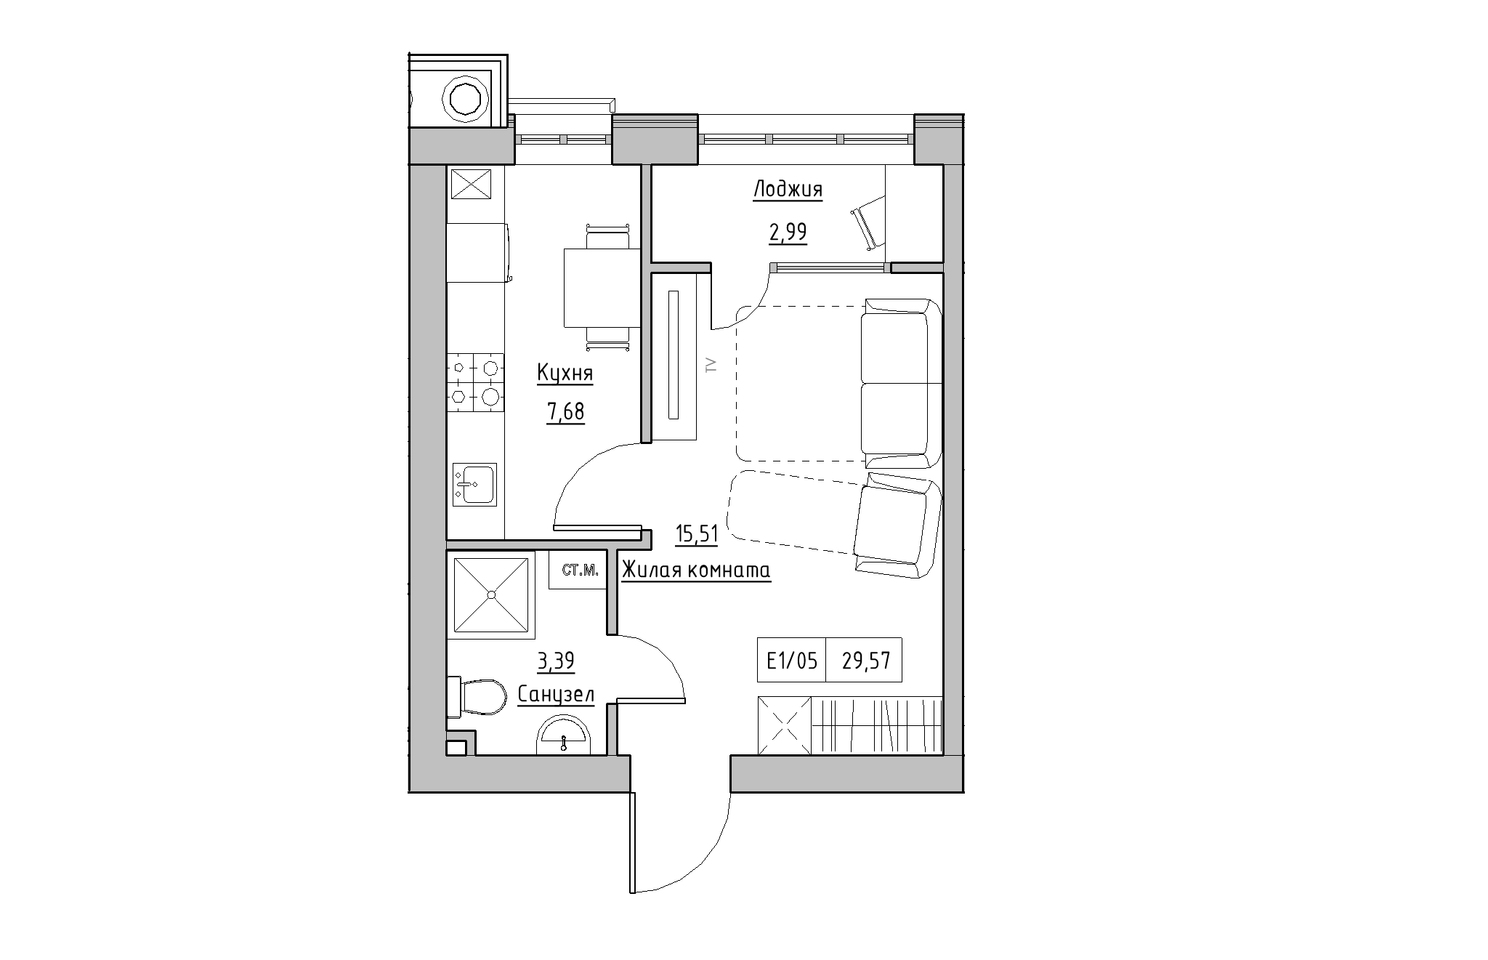 Planning 1-rm flats area 29.57m2, KS-010-01/0006.